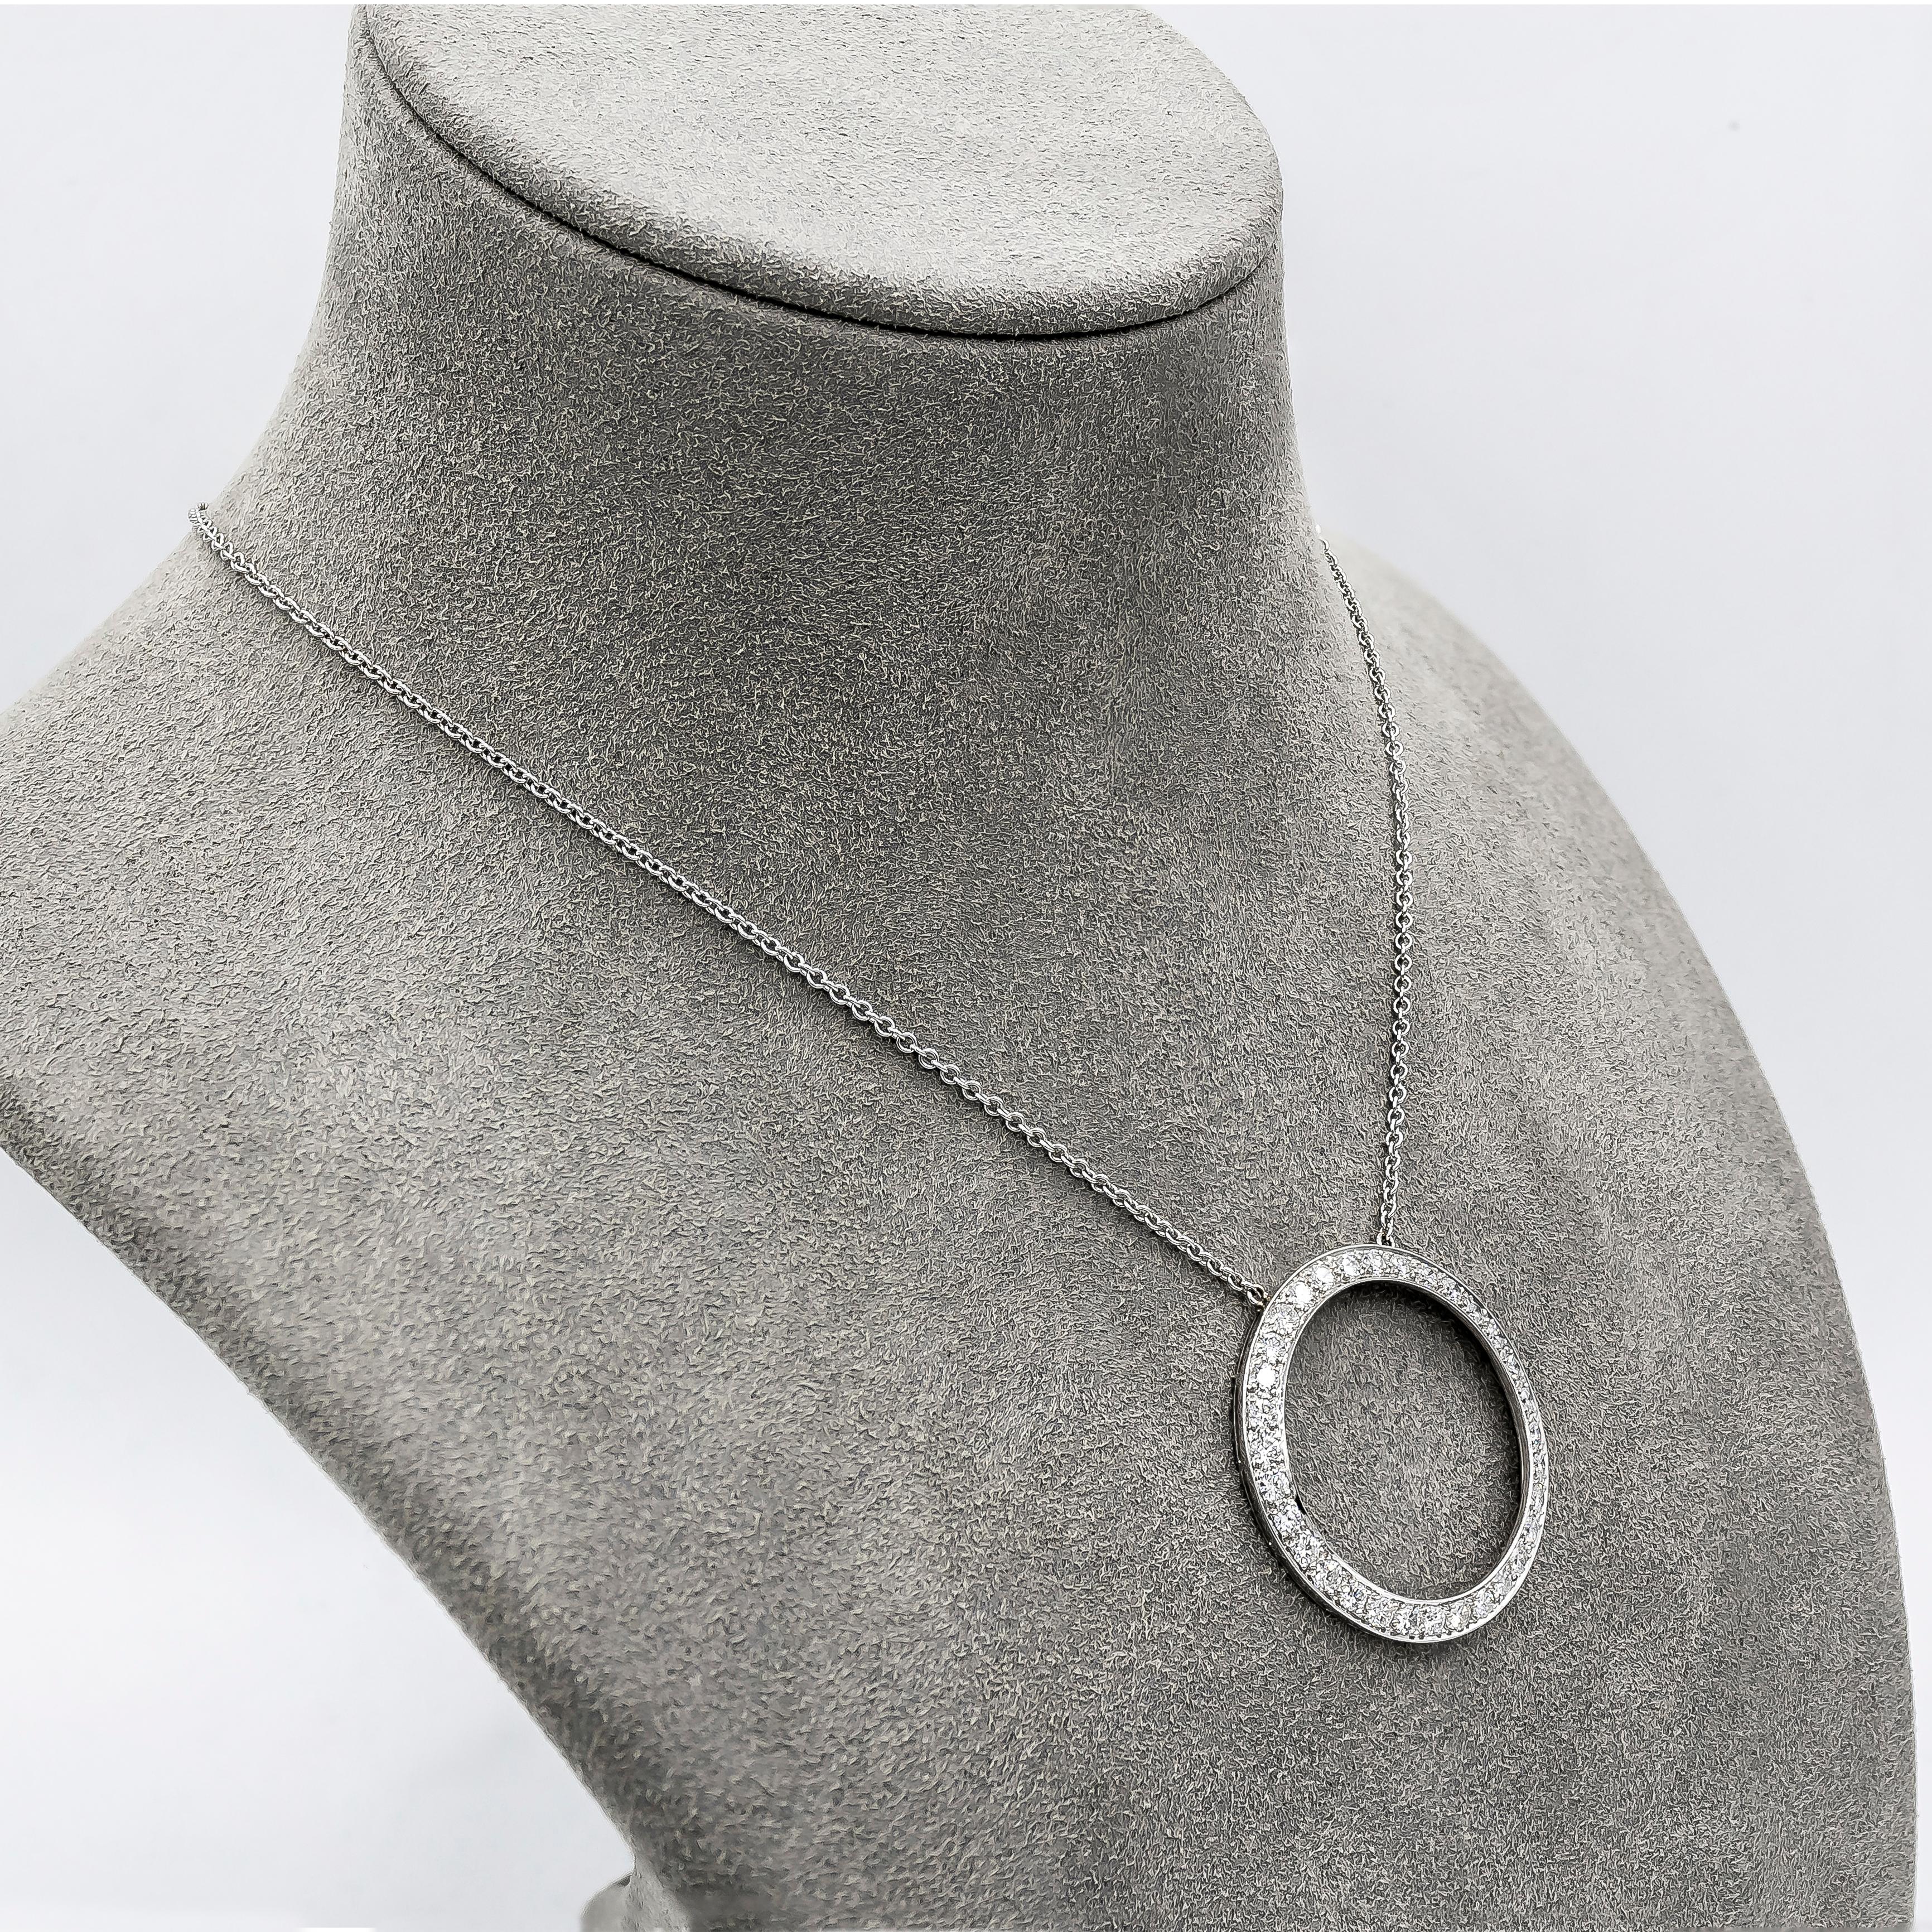 Contemporary Open-Work Diamond Circle Pendant Necklace